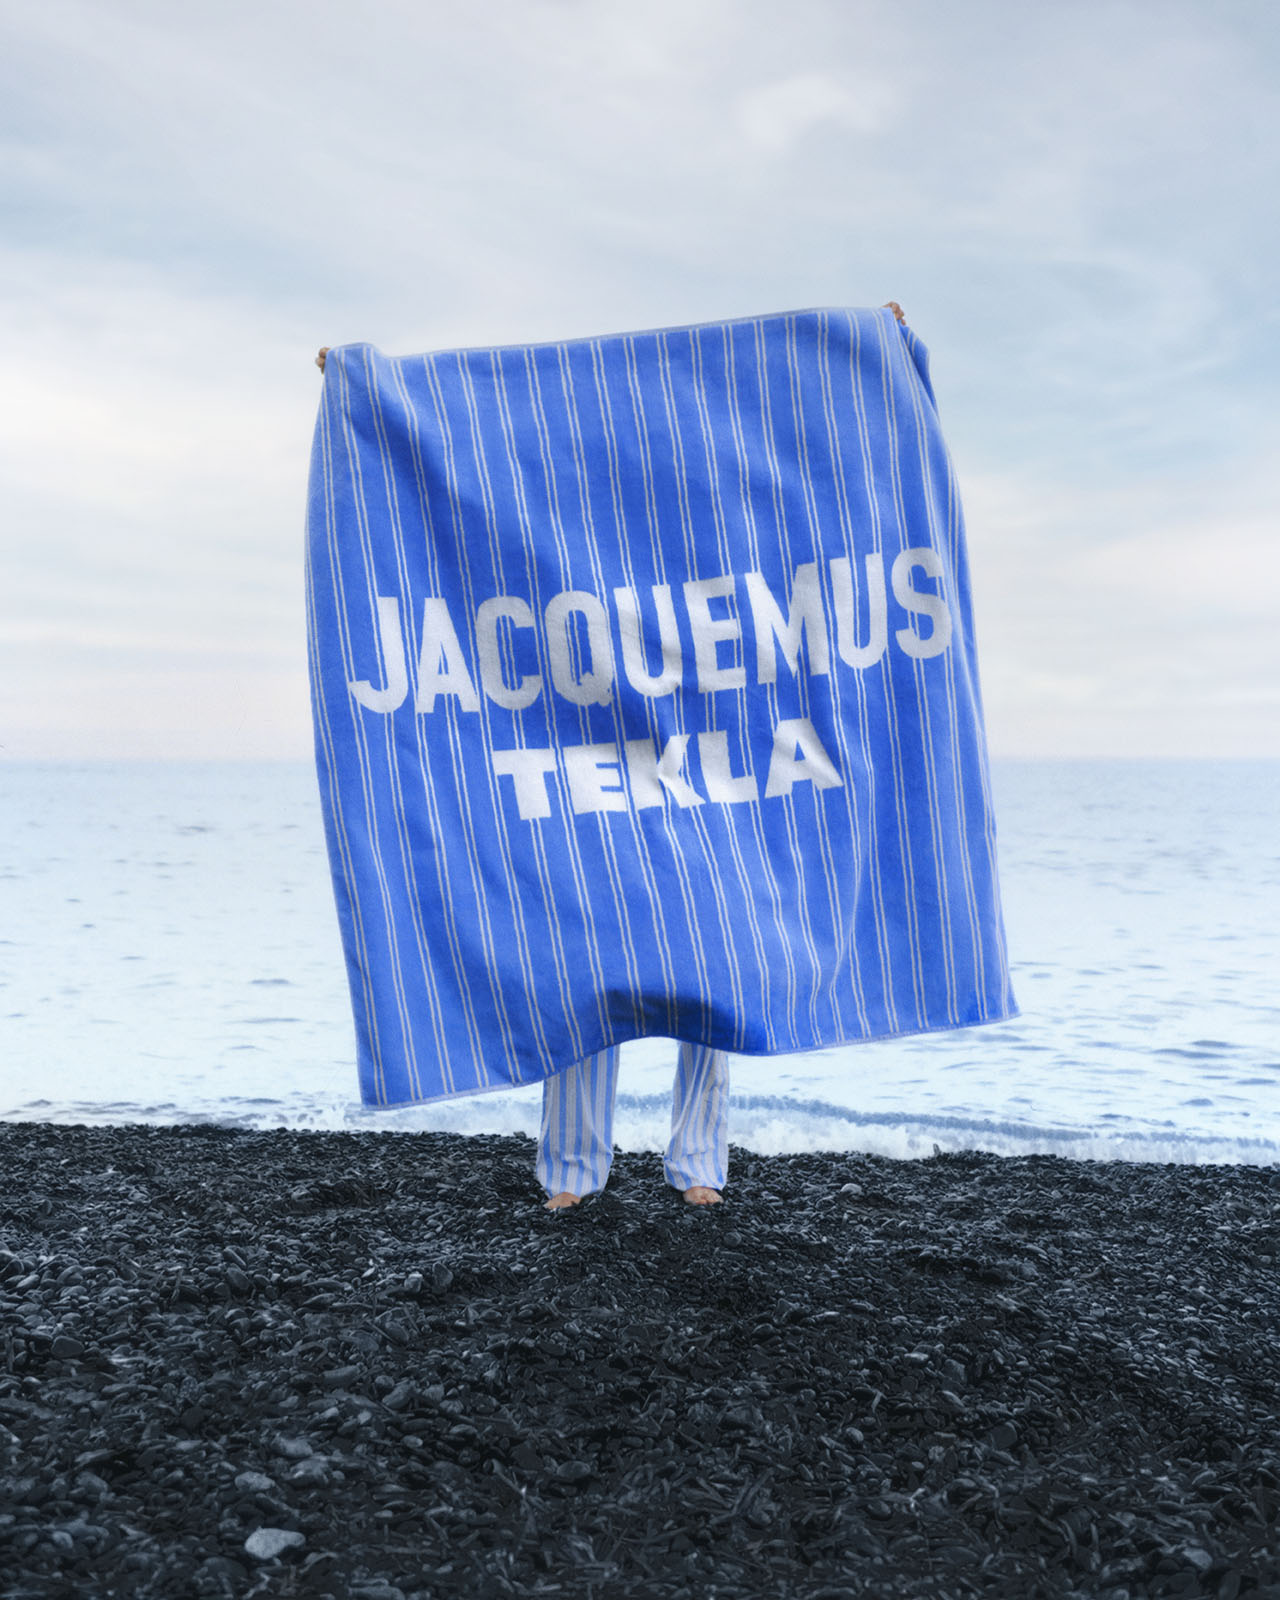 Jacquemus / Tekla